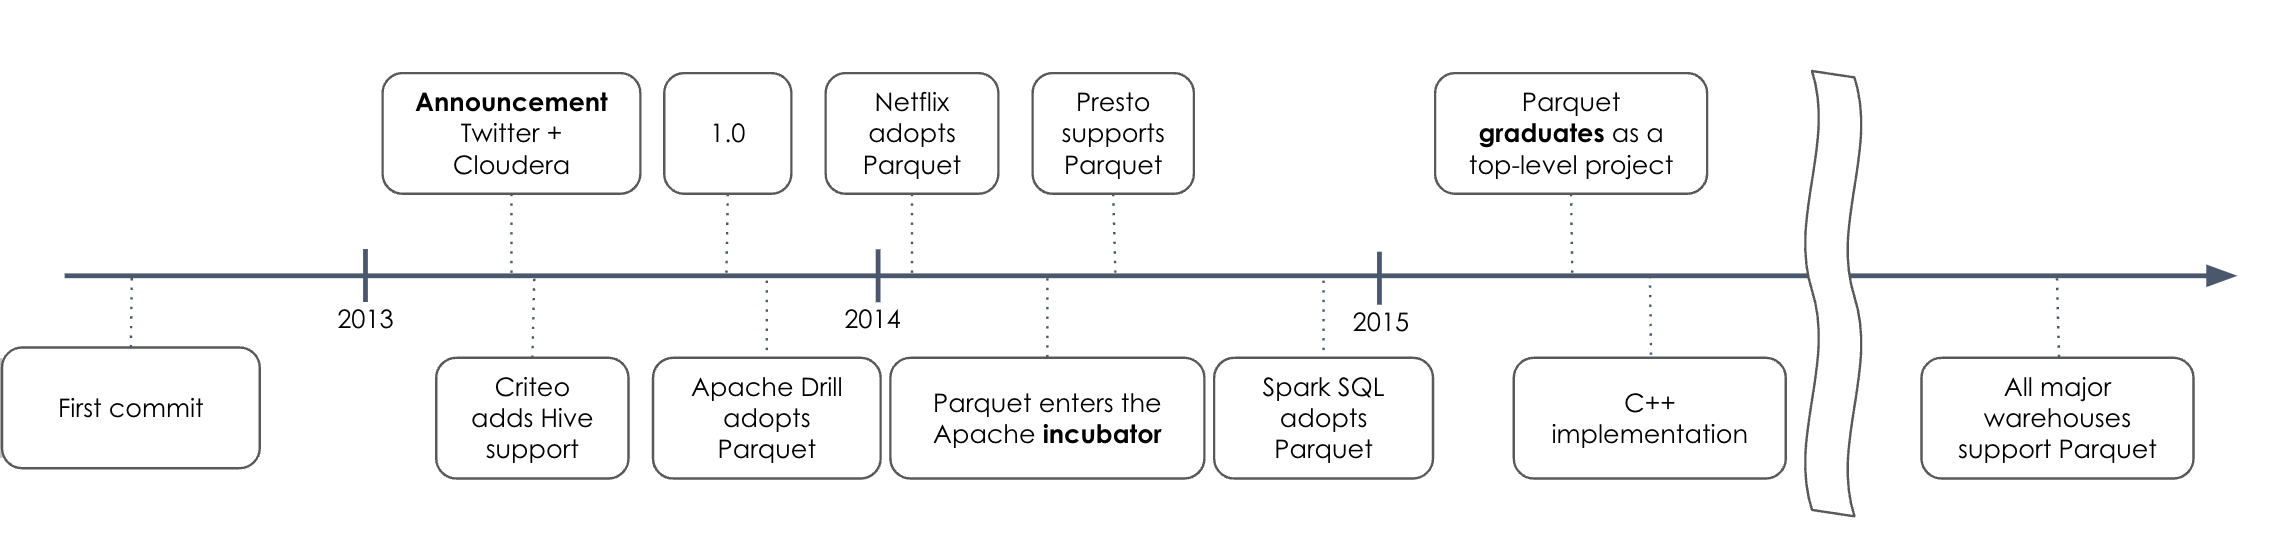 Parquet timeline